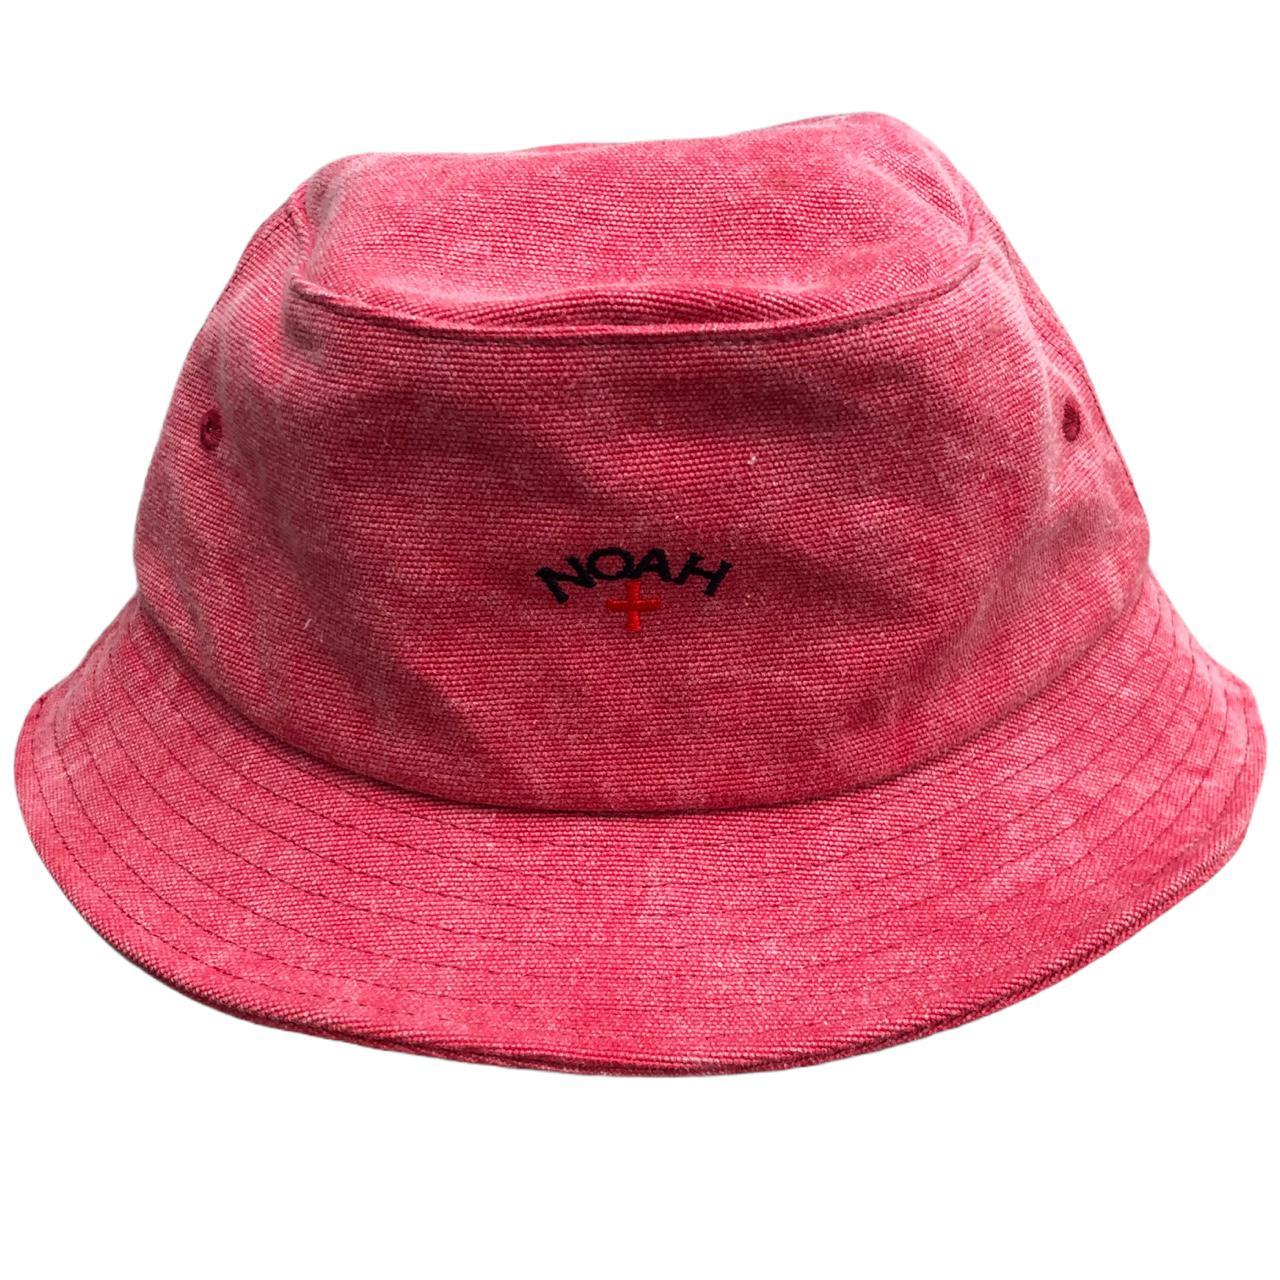 Product Image 1 - Noah Crusher Bucket Hat. Size